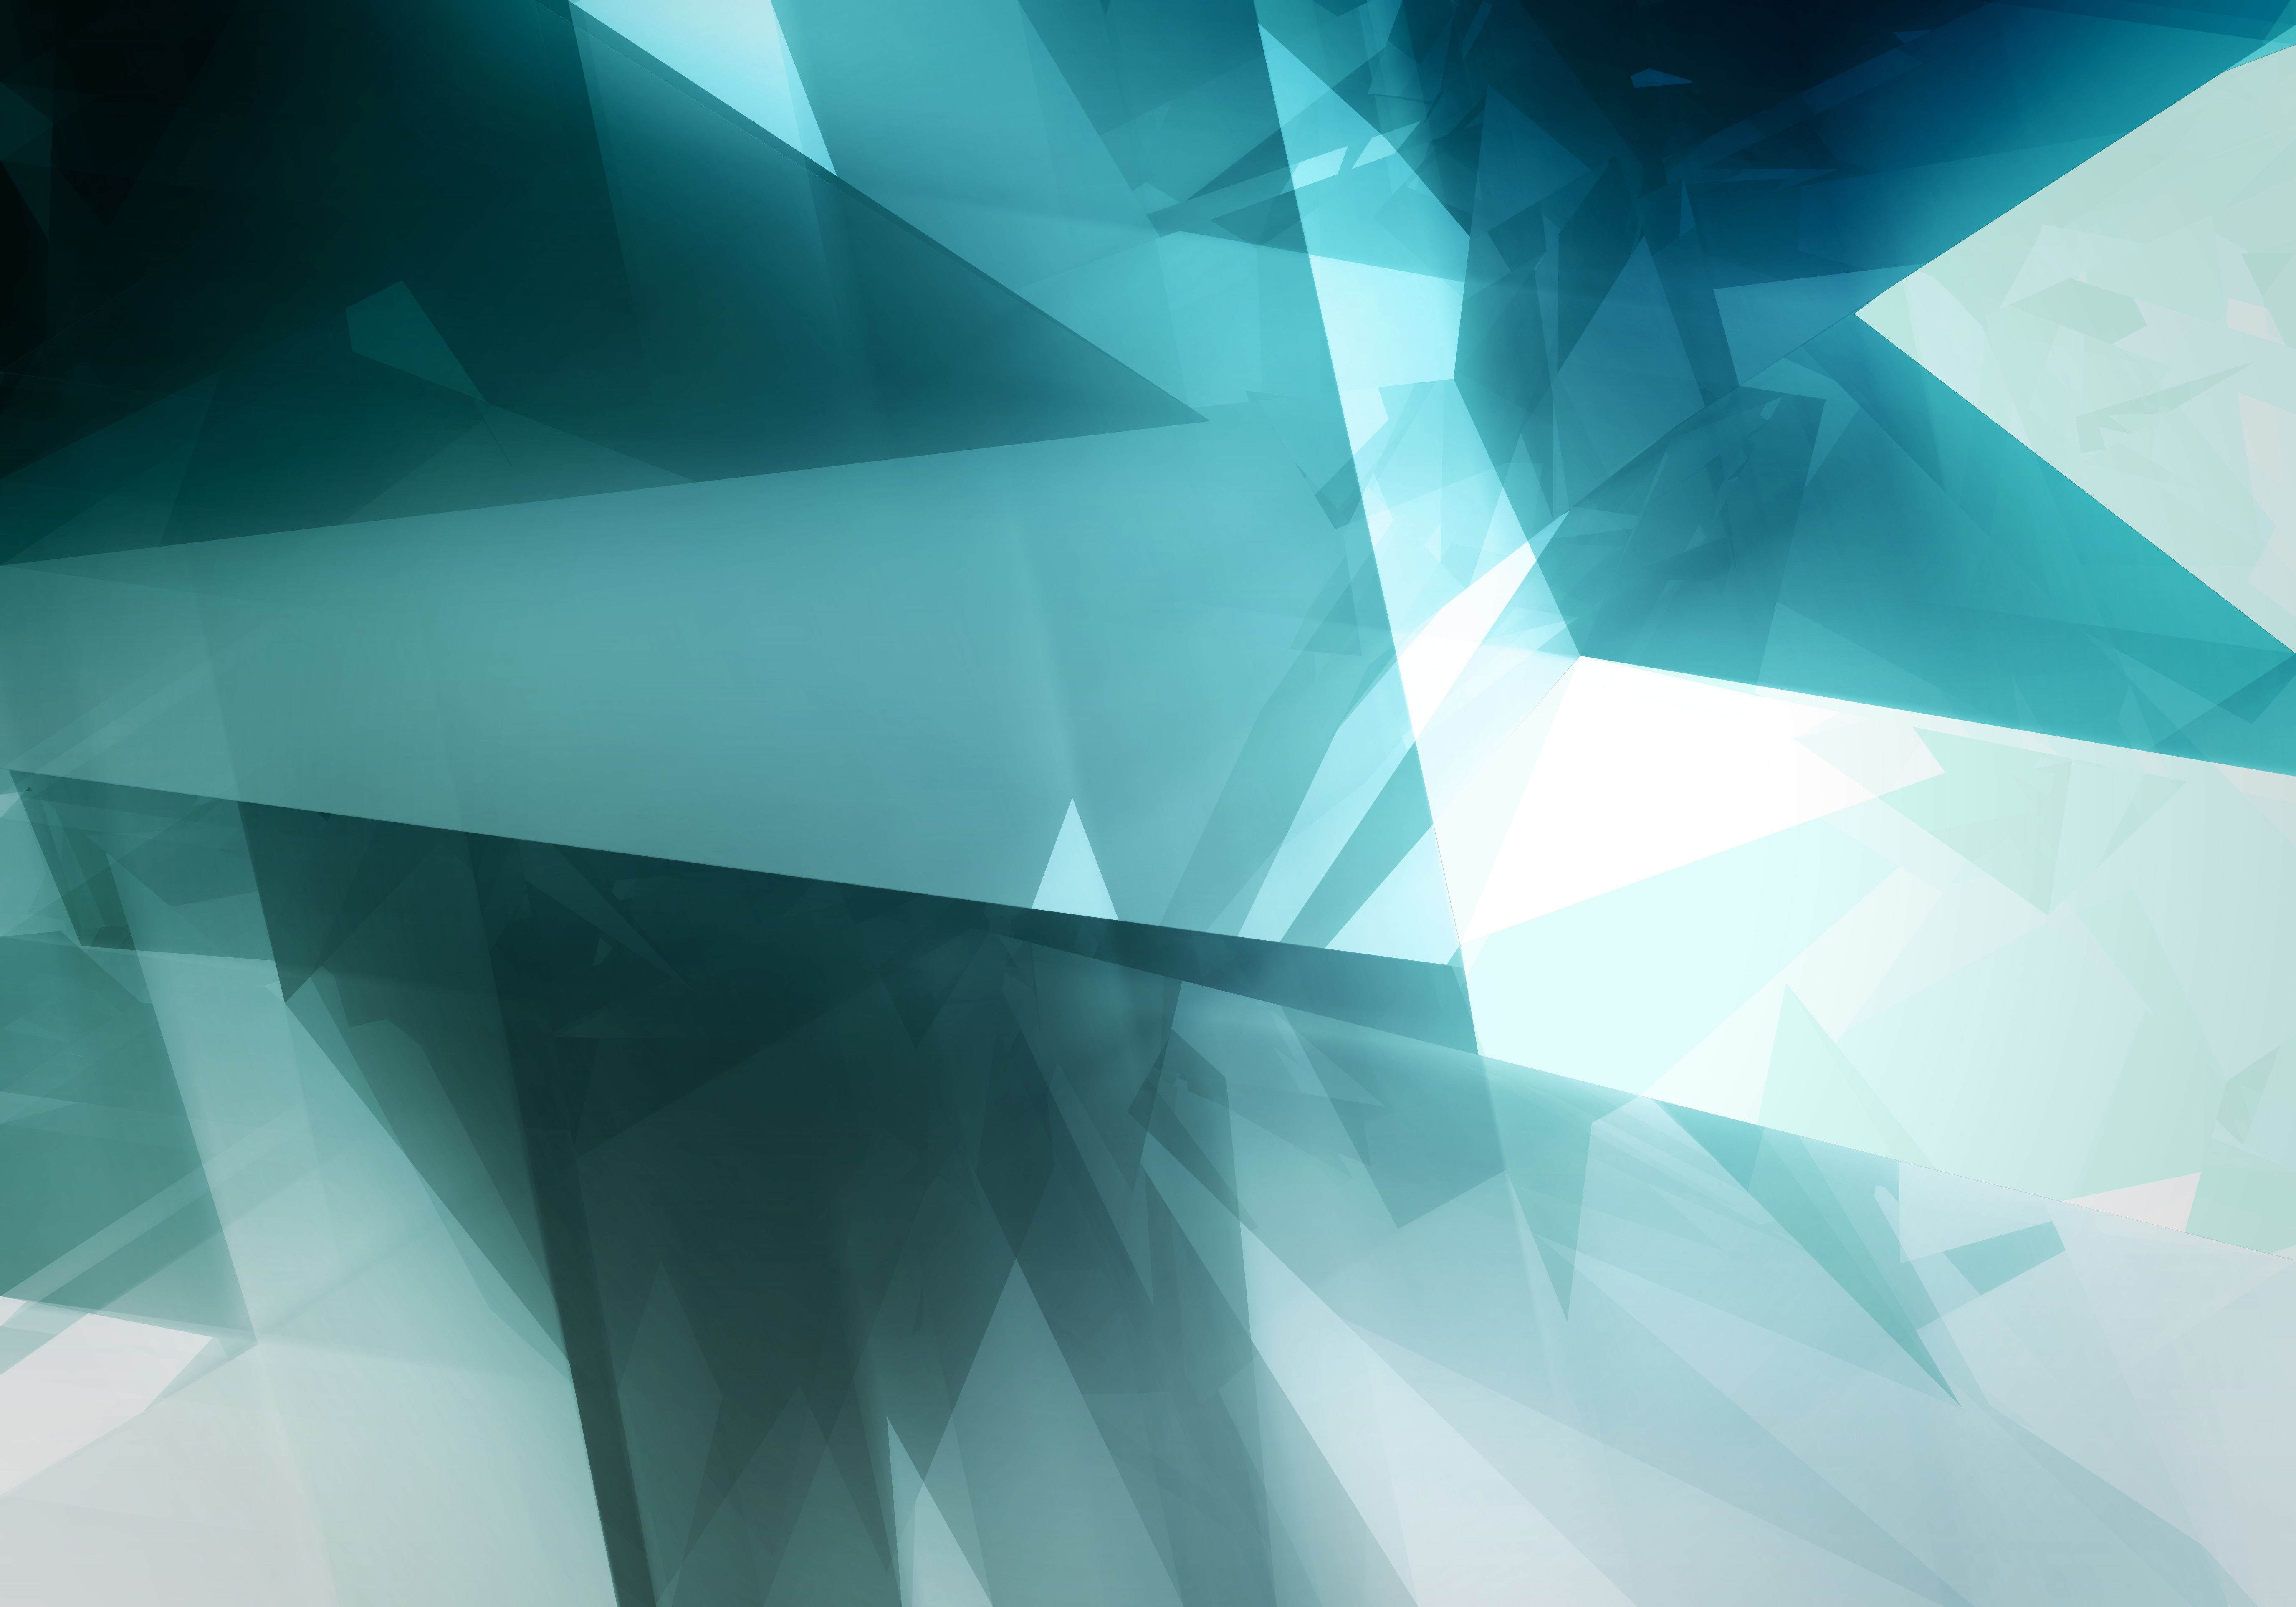 Turquoise 5k Retina Ultra HD Wallpaper. Background Image